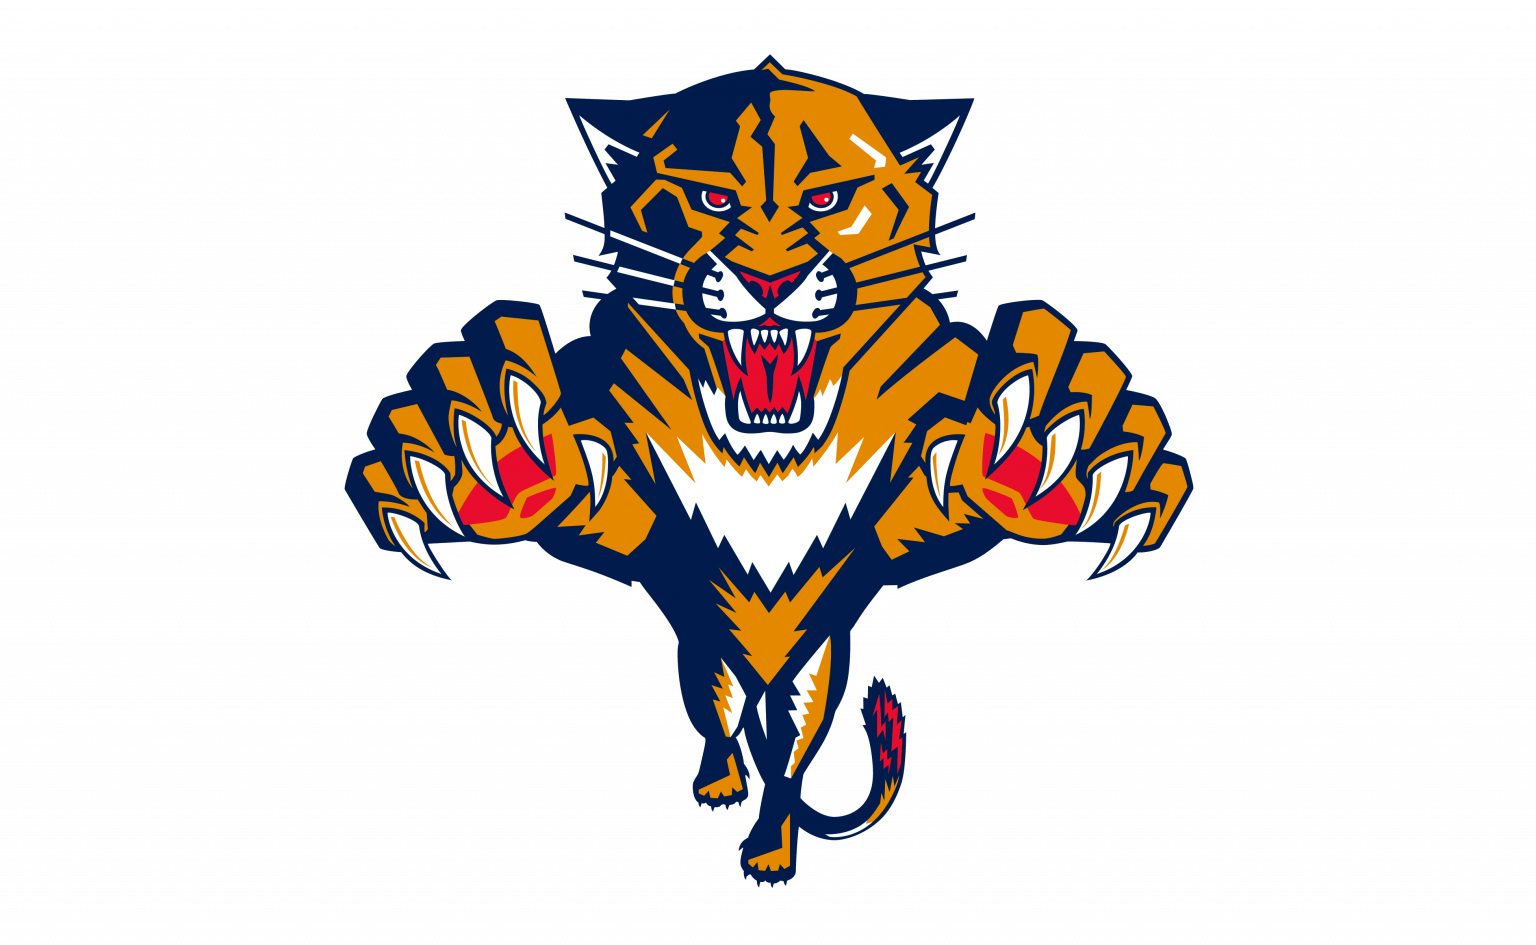 Florida Panthers image